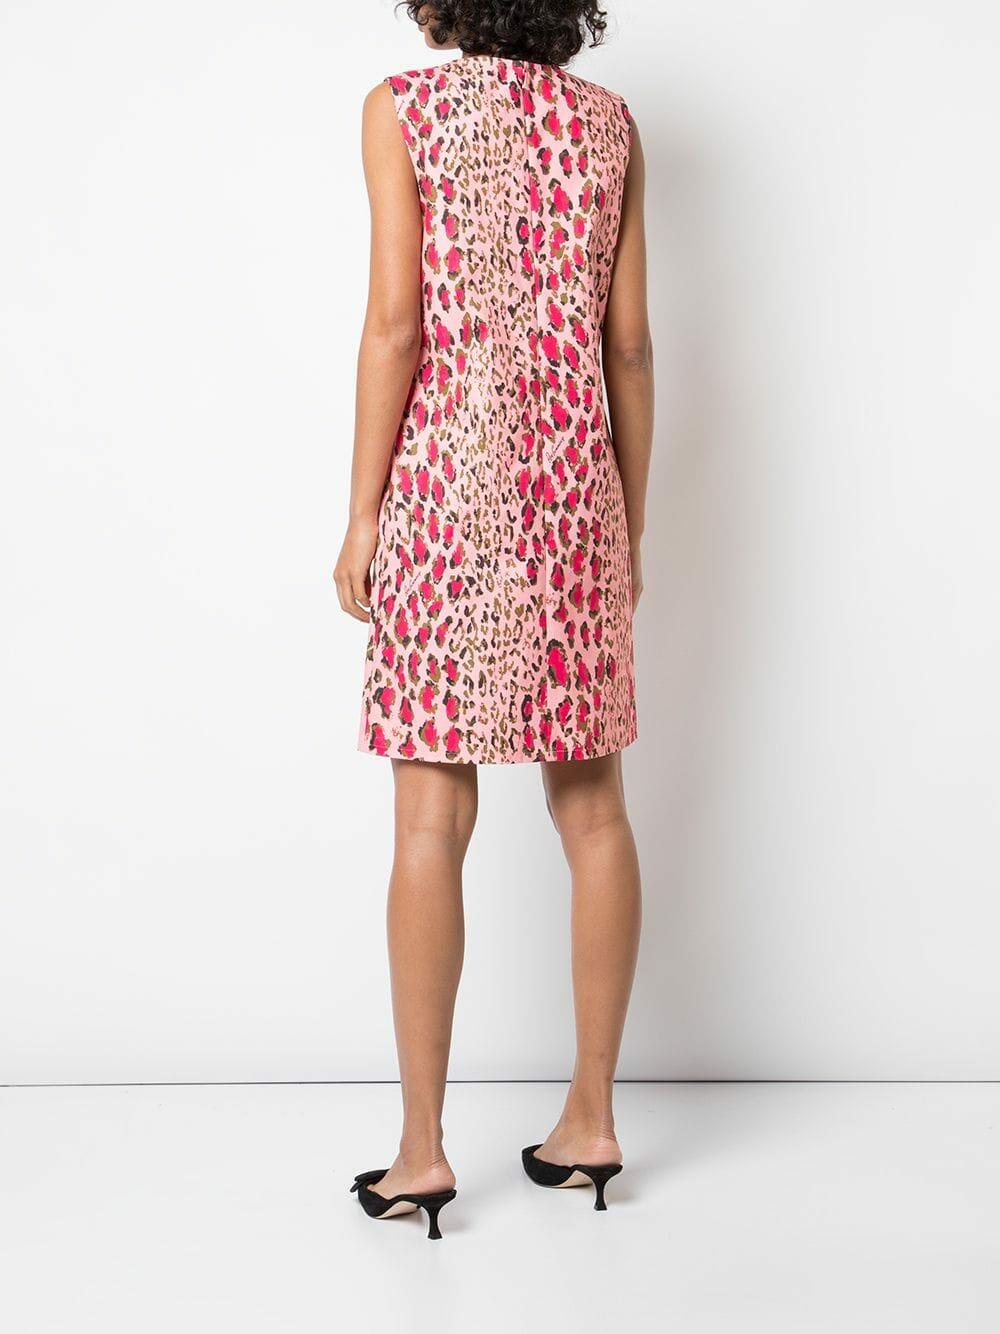 Carolina Herrera - Pink Leopard Stretch Cotton Sleeveless Dress